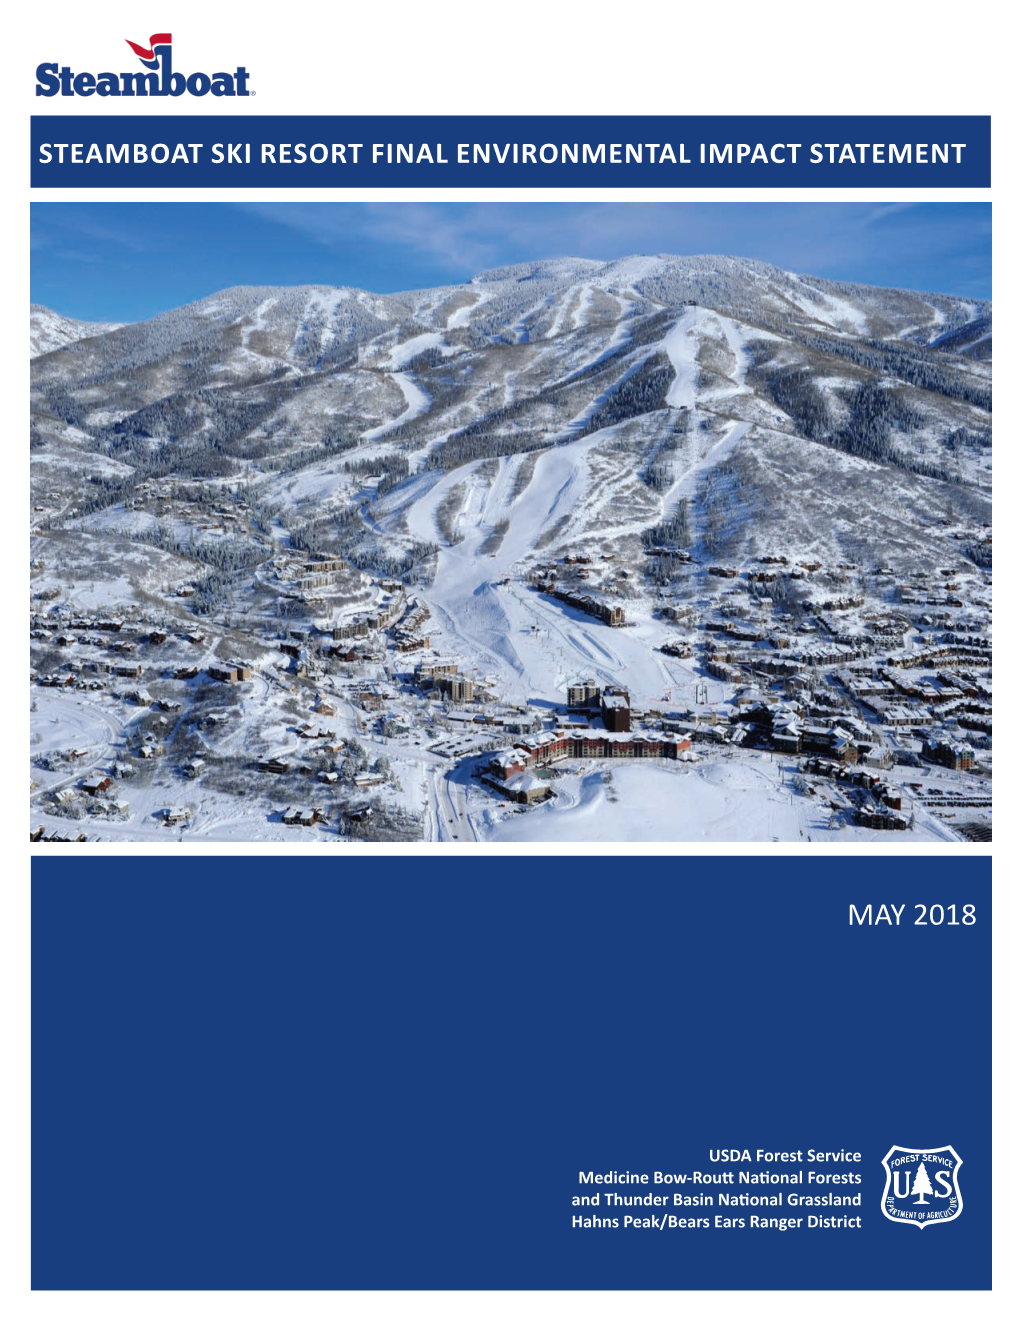 2018 Steamboat Ski Resort Final Environmental Impact Statement